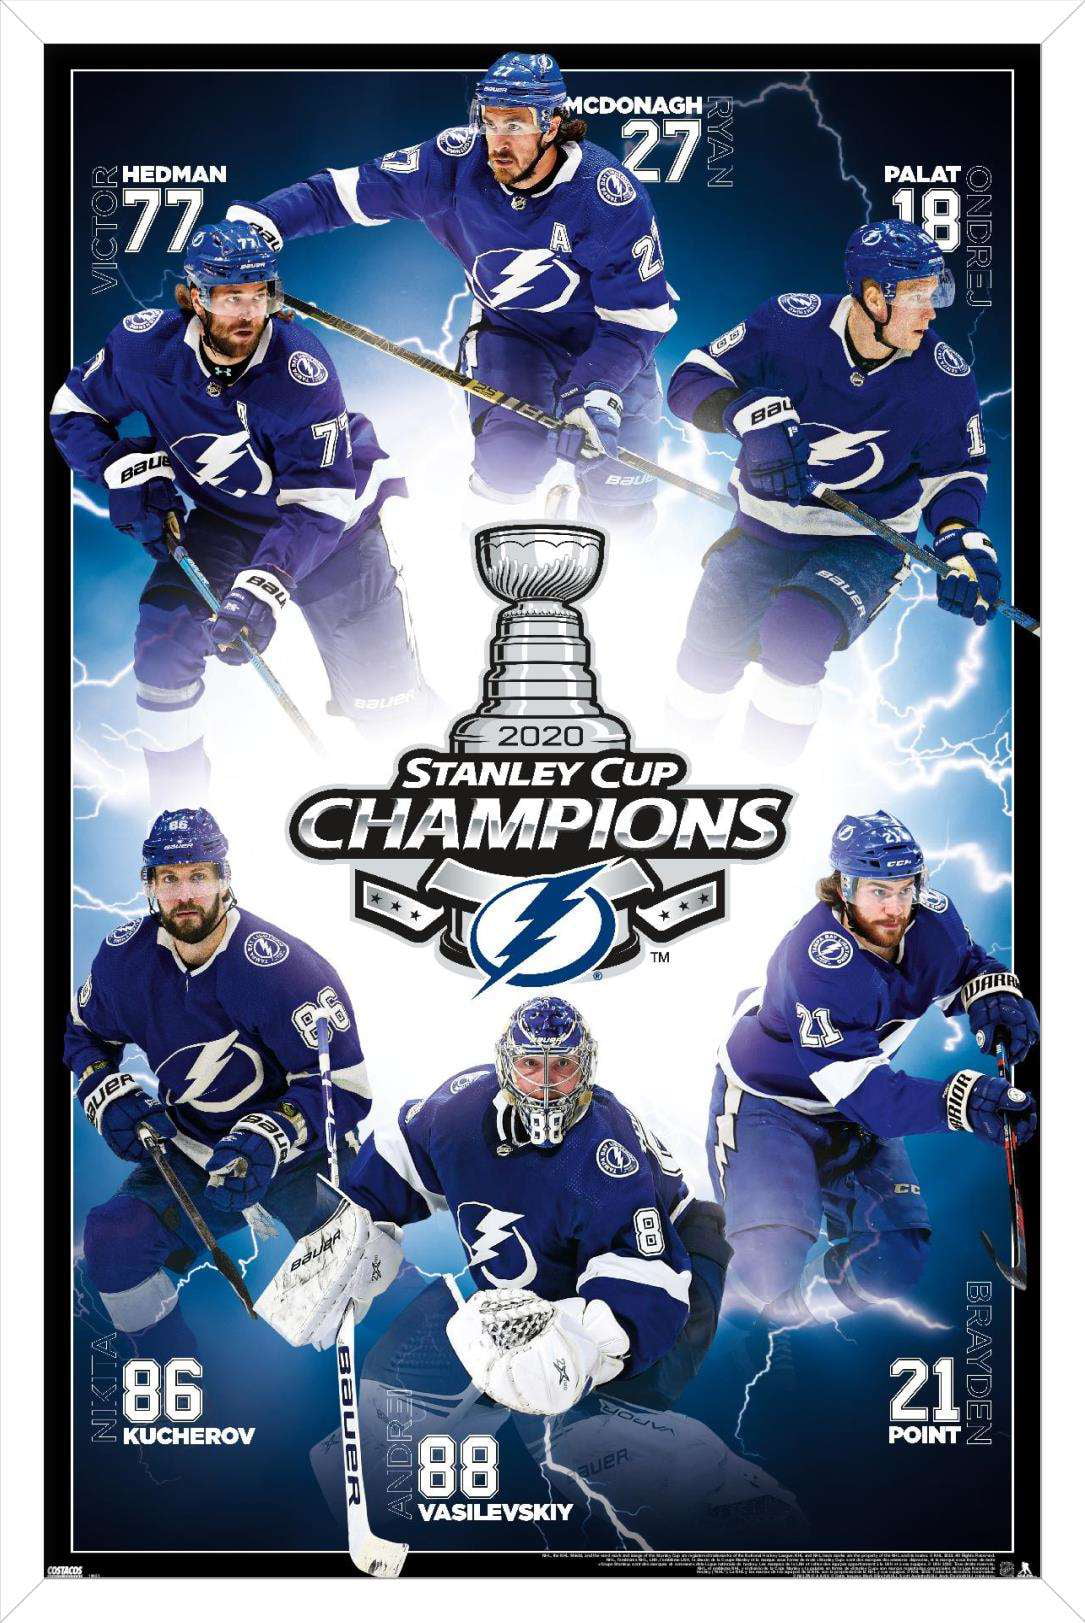 Brayden Point Poster Tampa Bay Lightning NHL Sports Print 